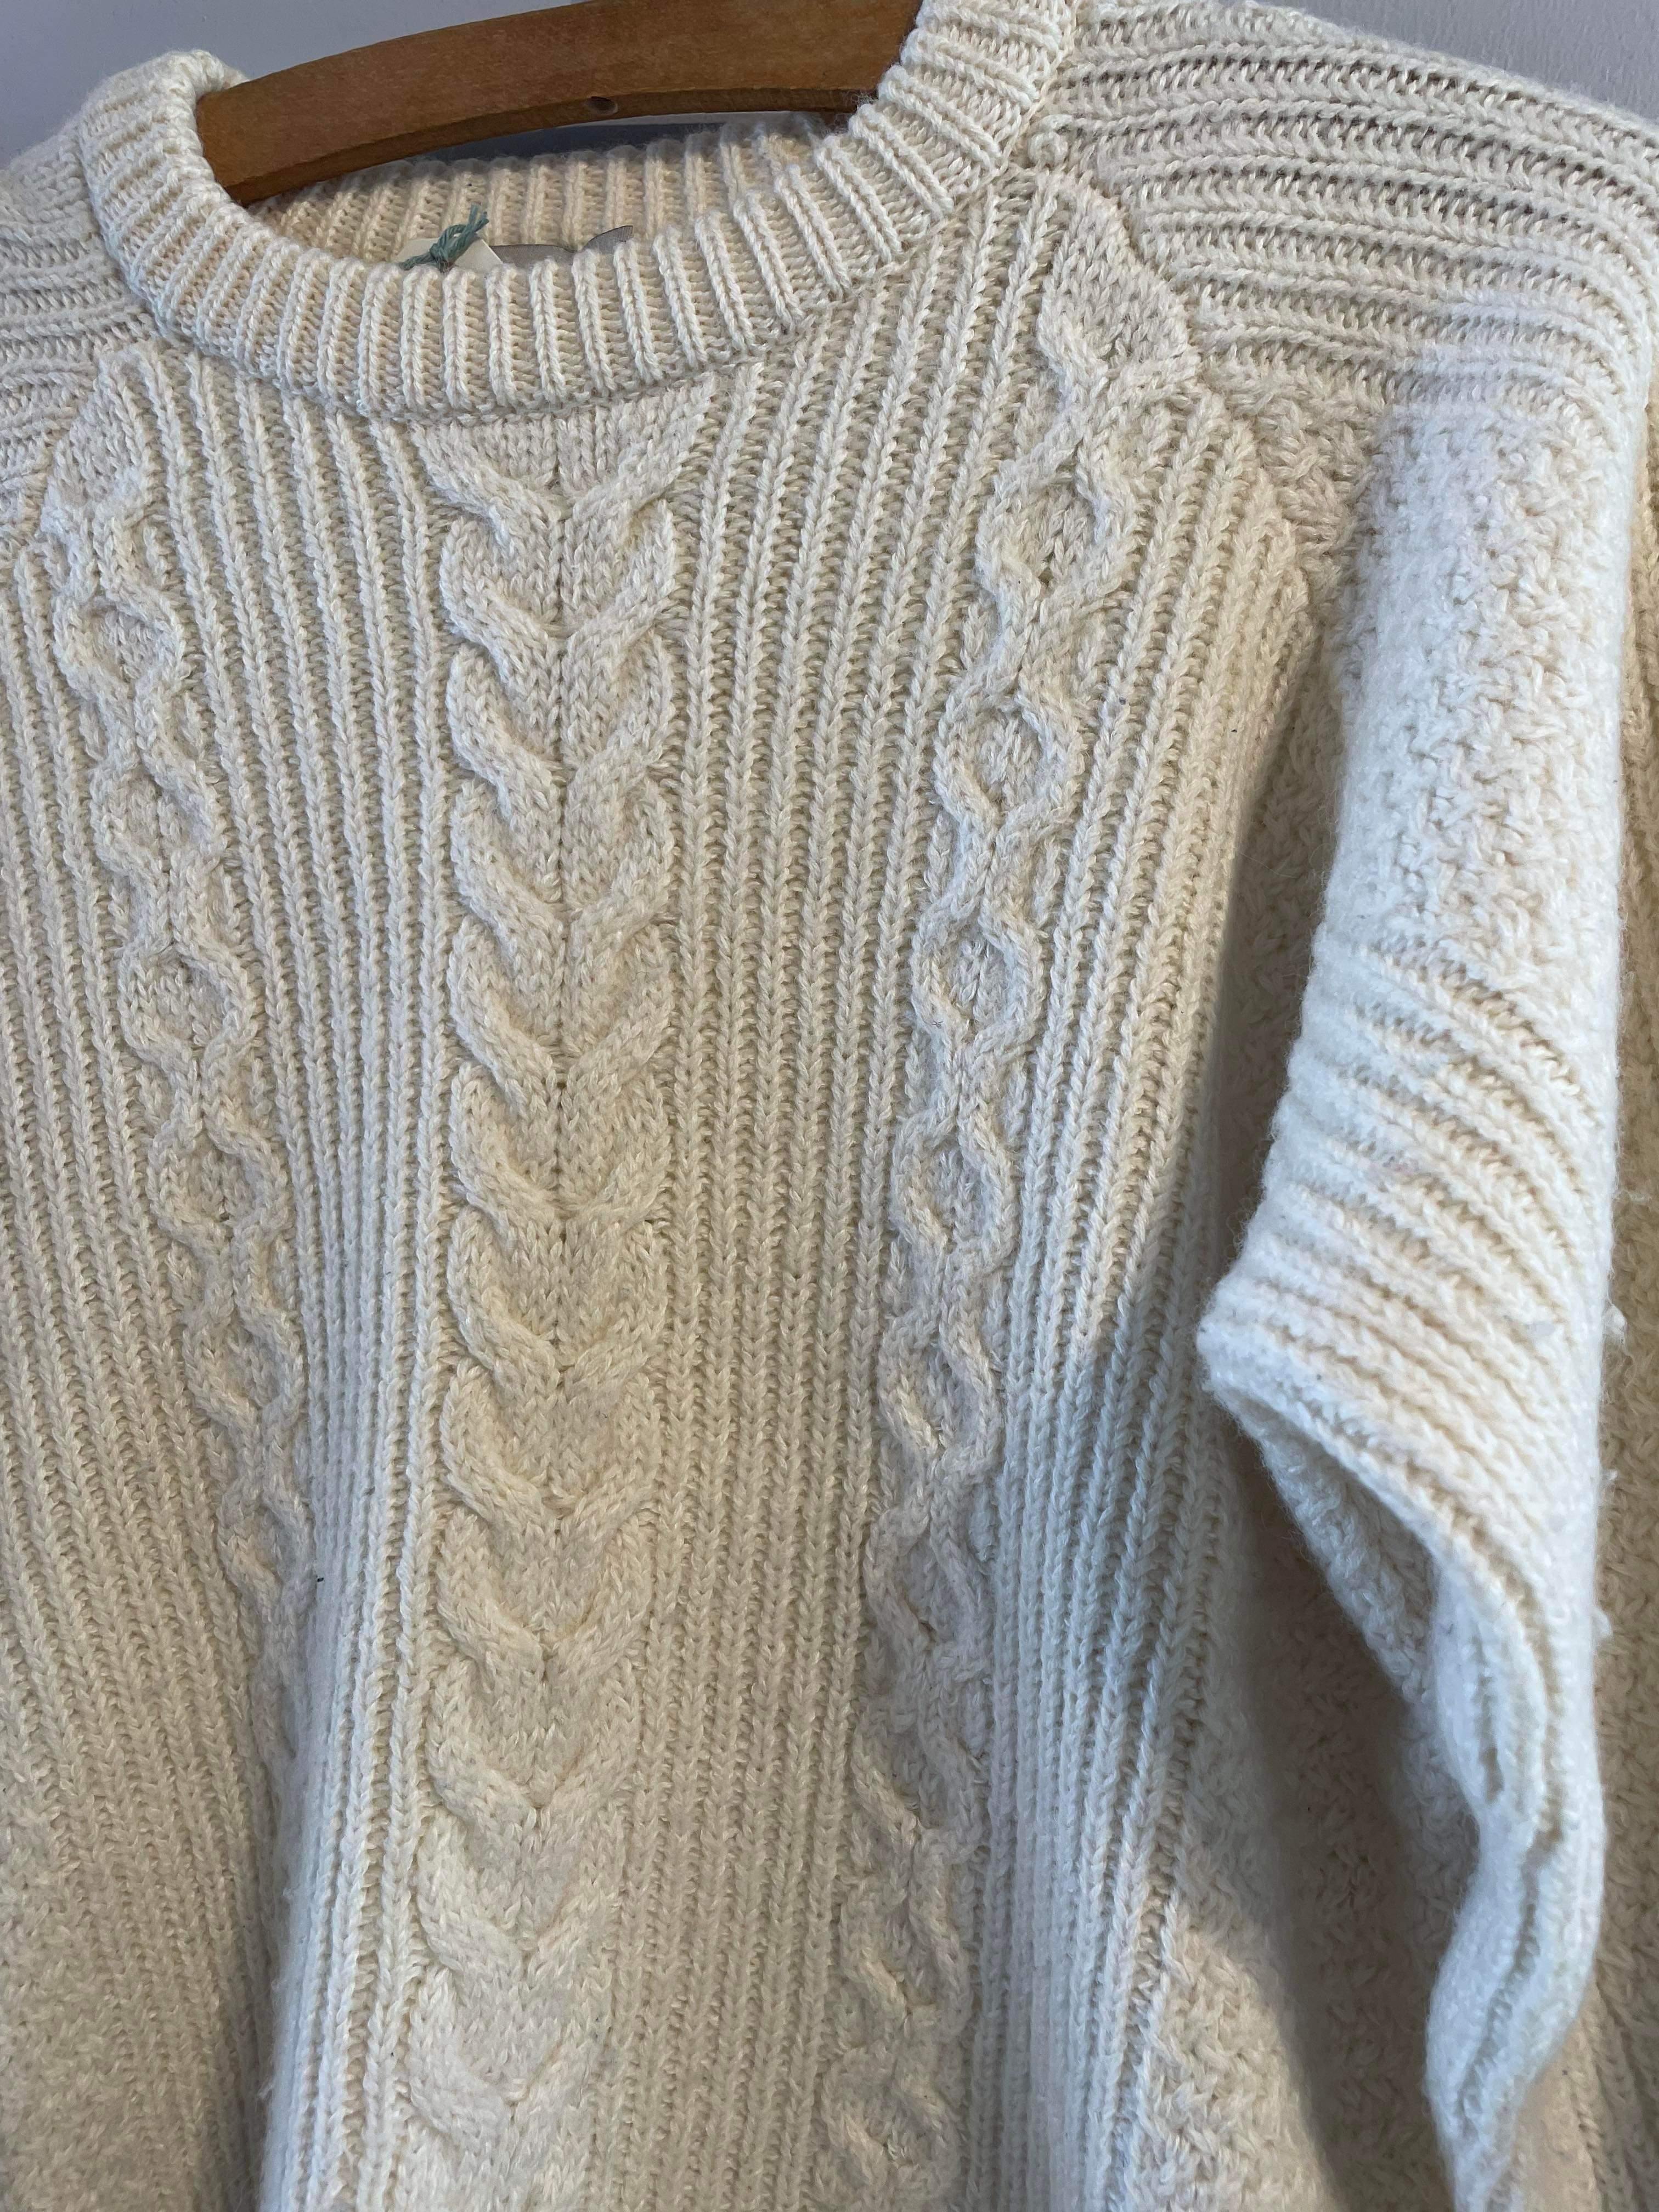 Asos - Sweater - Size: 36